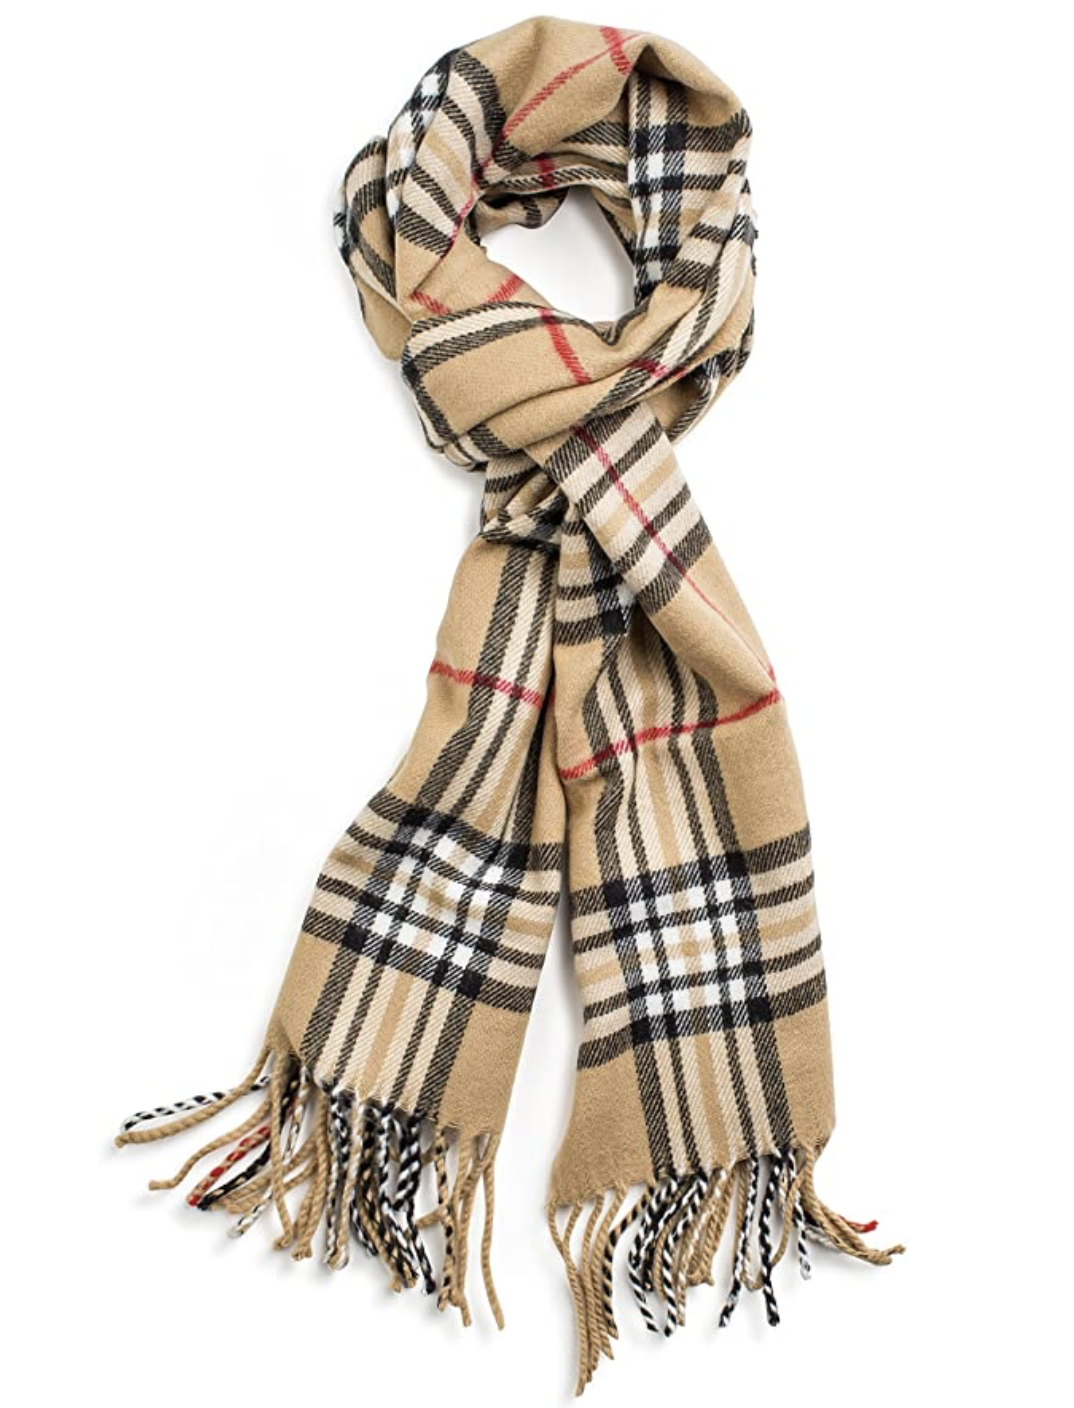 plaid scarf